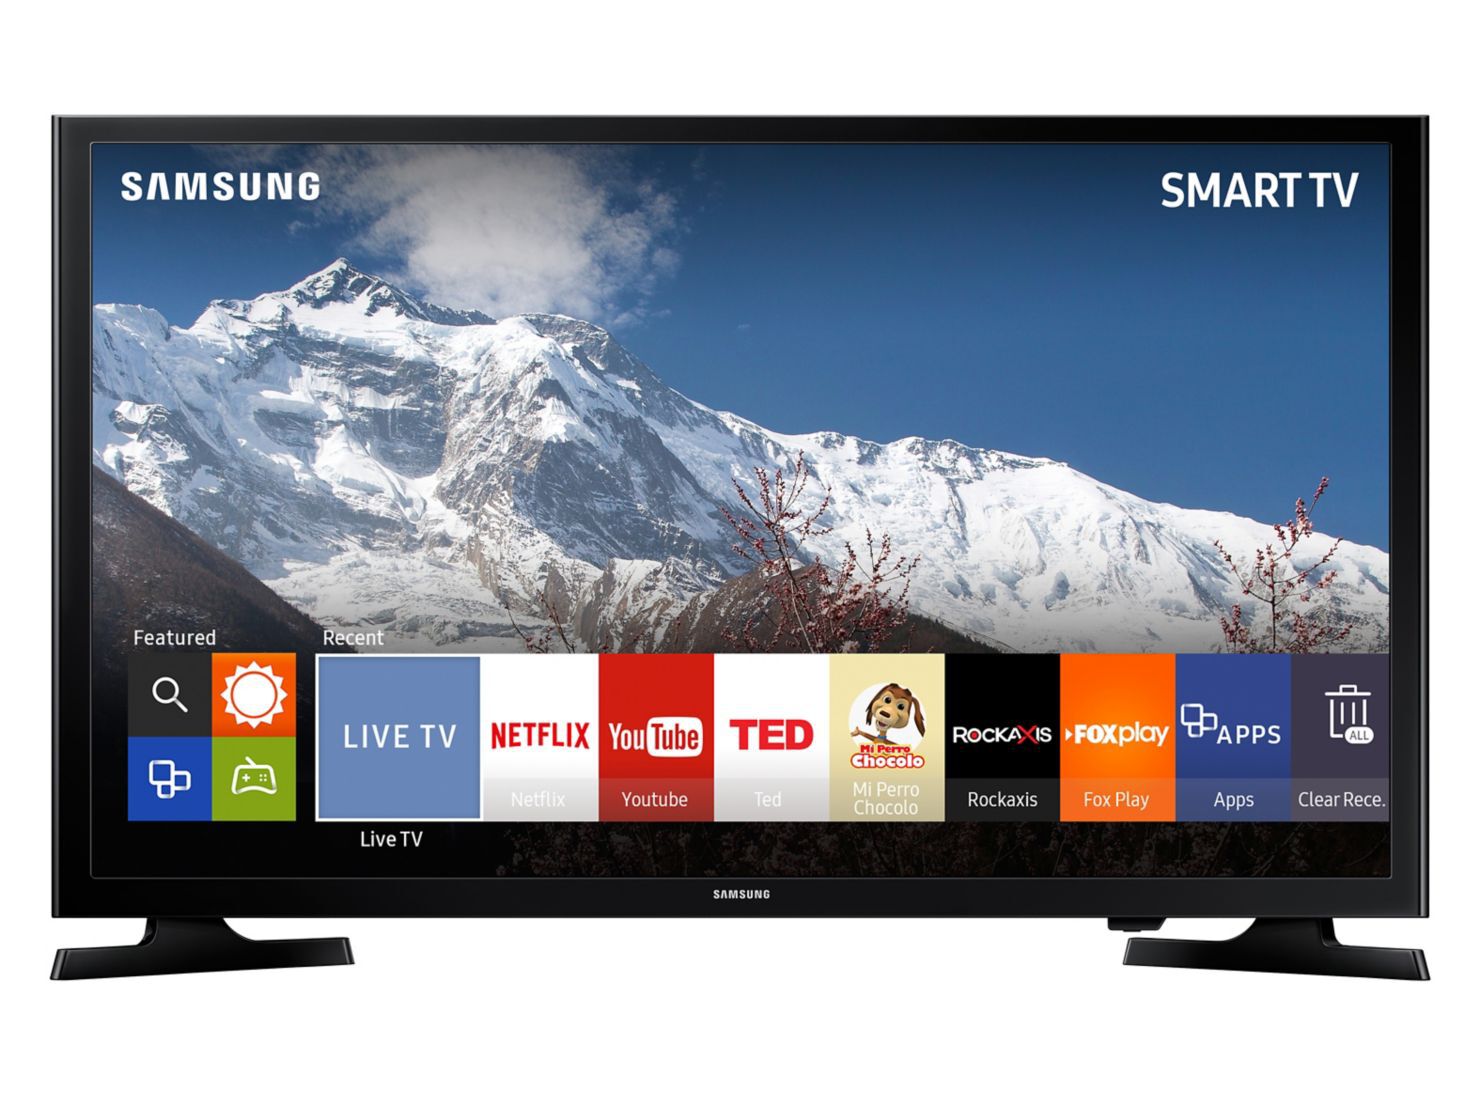 Samsung Smart TV 32. Самсунг лед 40 смарт ТВ. Samsung Smart TV 43. Телевизор самсунг 32 дюйма смарт ТВ. Телевизор 32 2020